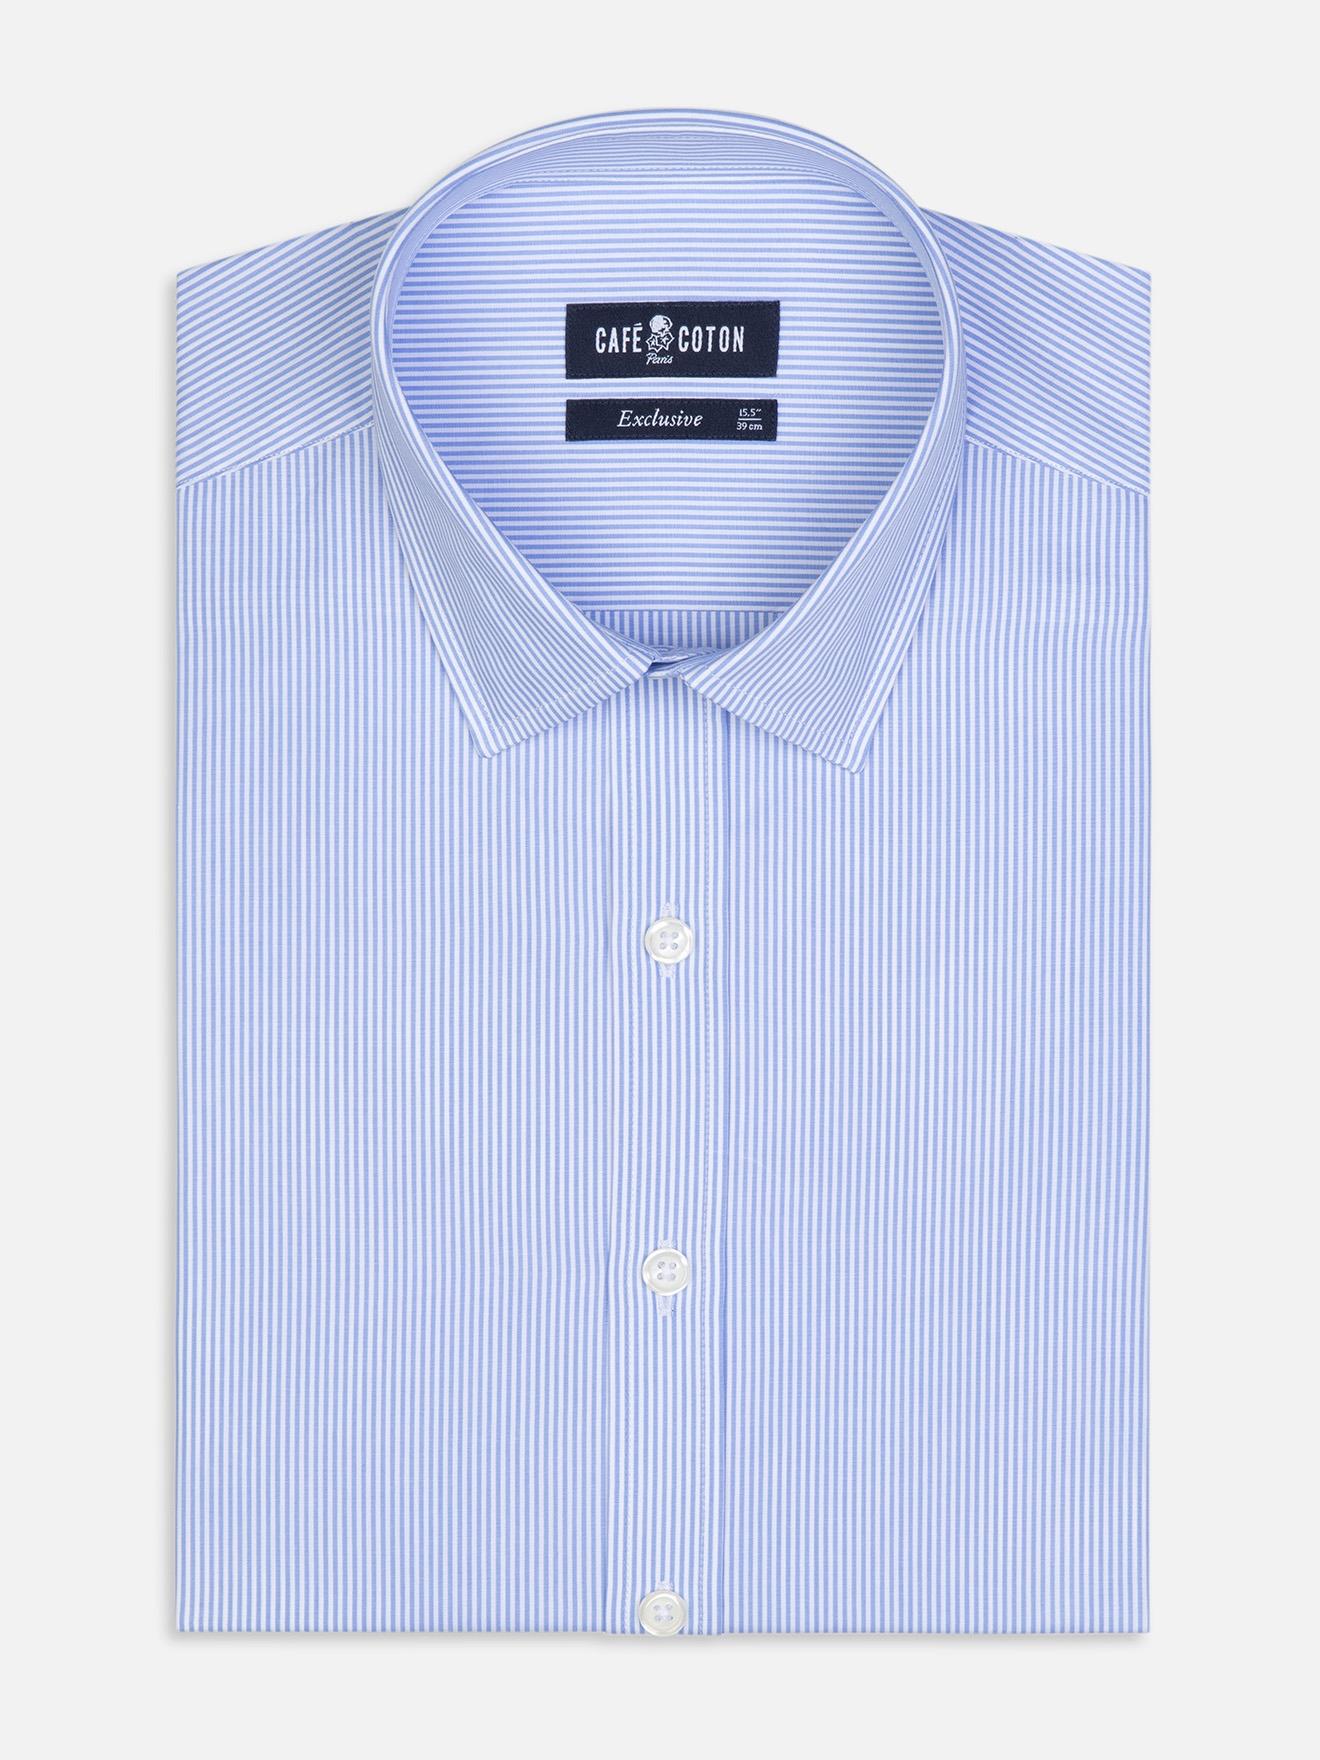 Staat Spuug uit Word gek Menthon sky blue striped slim fit shirt - Small collar